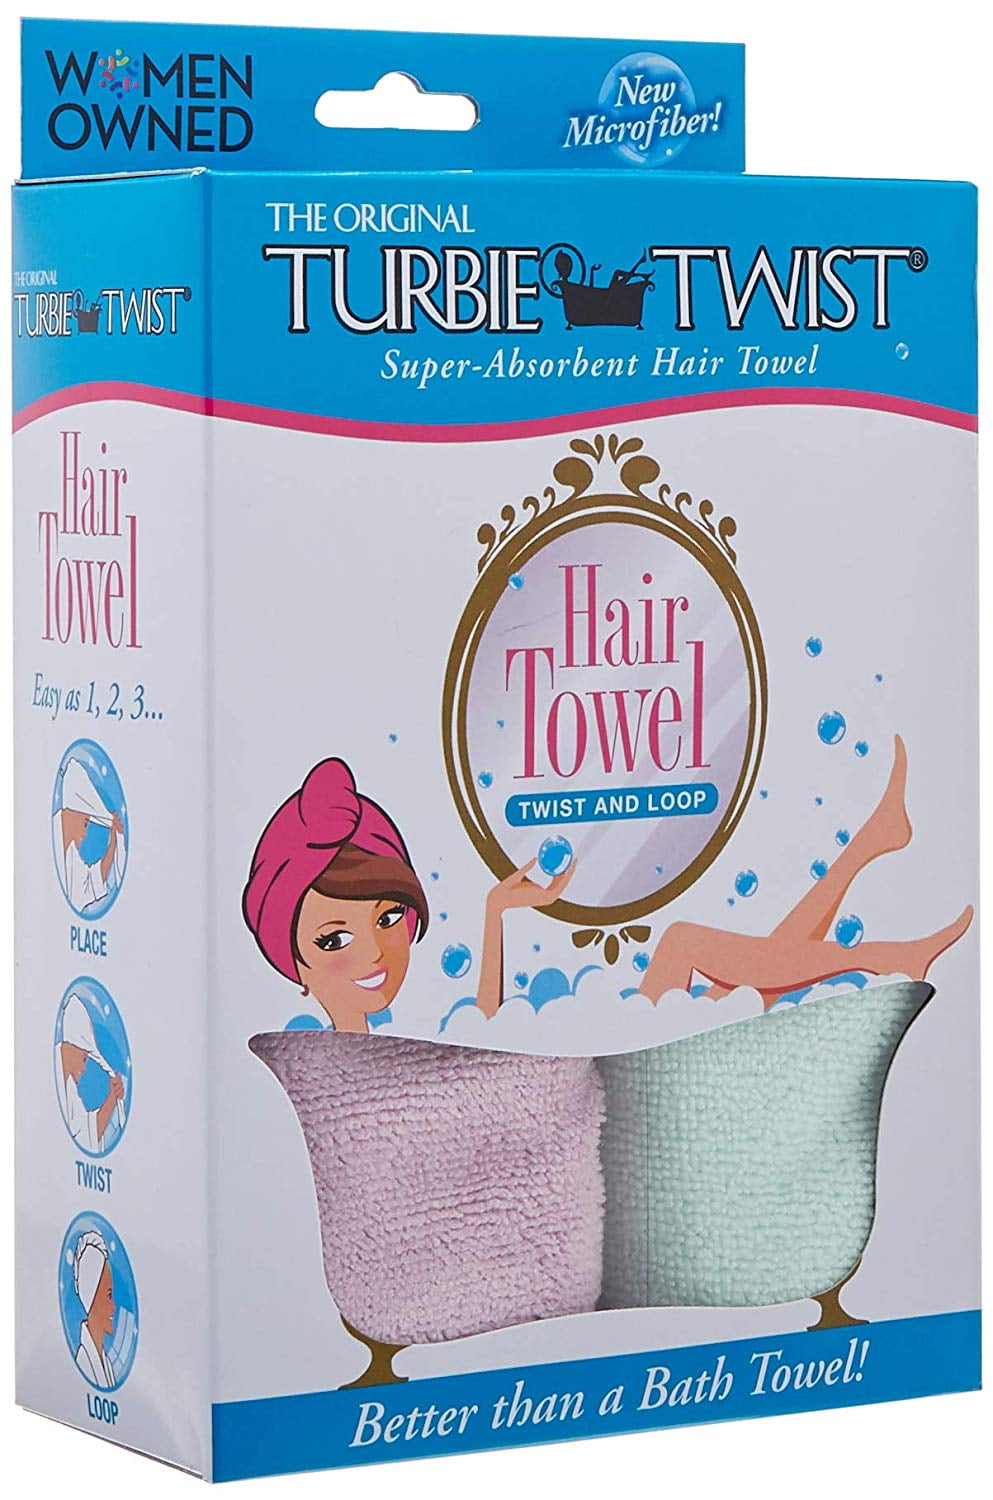 Turbie Twist Microfiber Hair Towel Wrap Single Pack – The Original Microfib... 